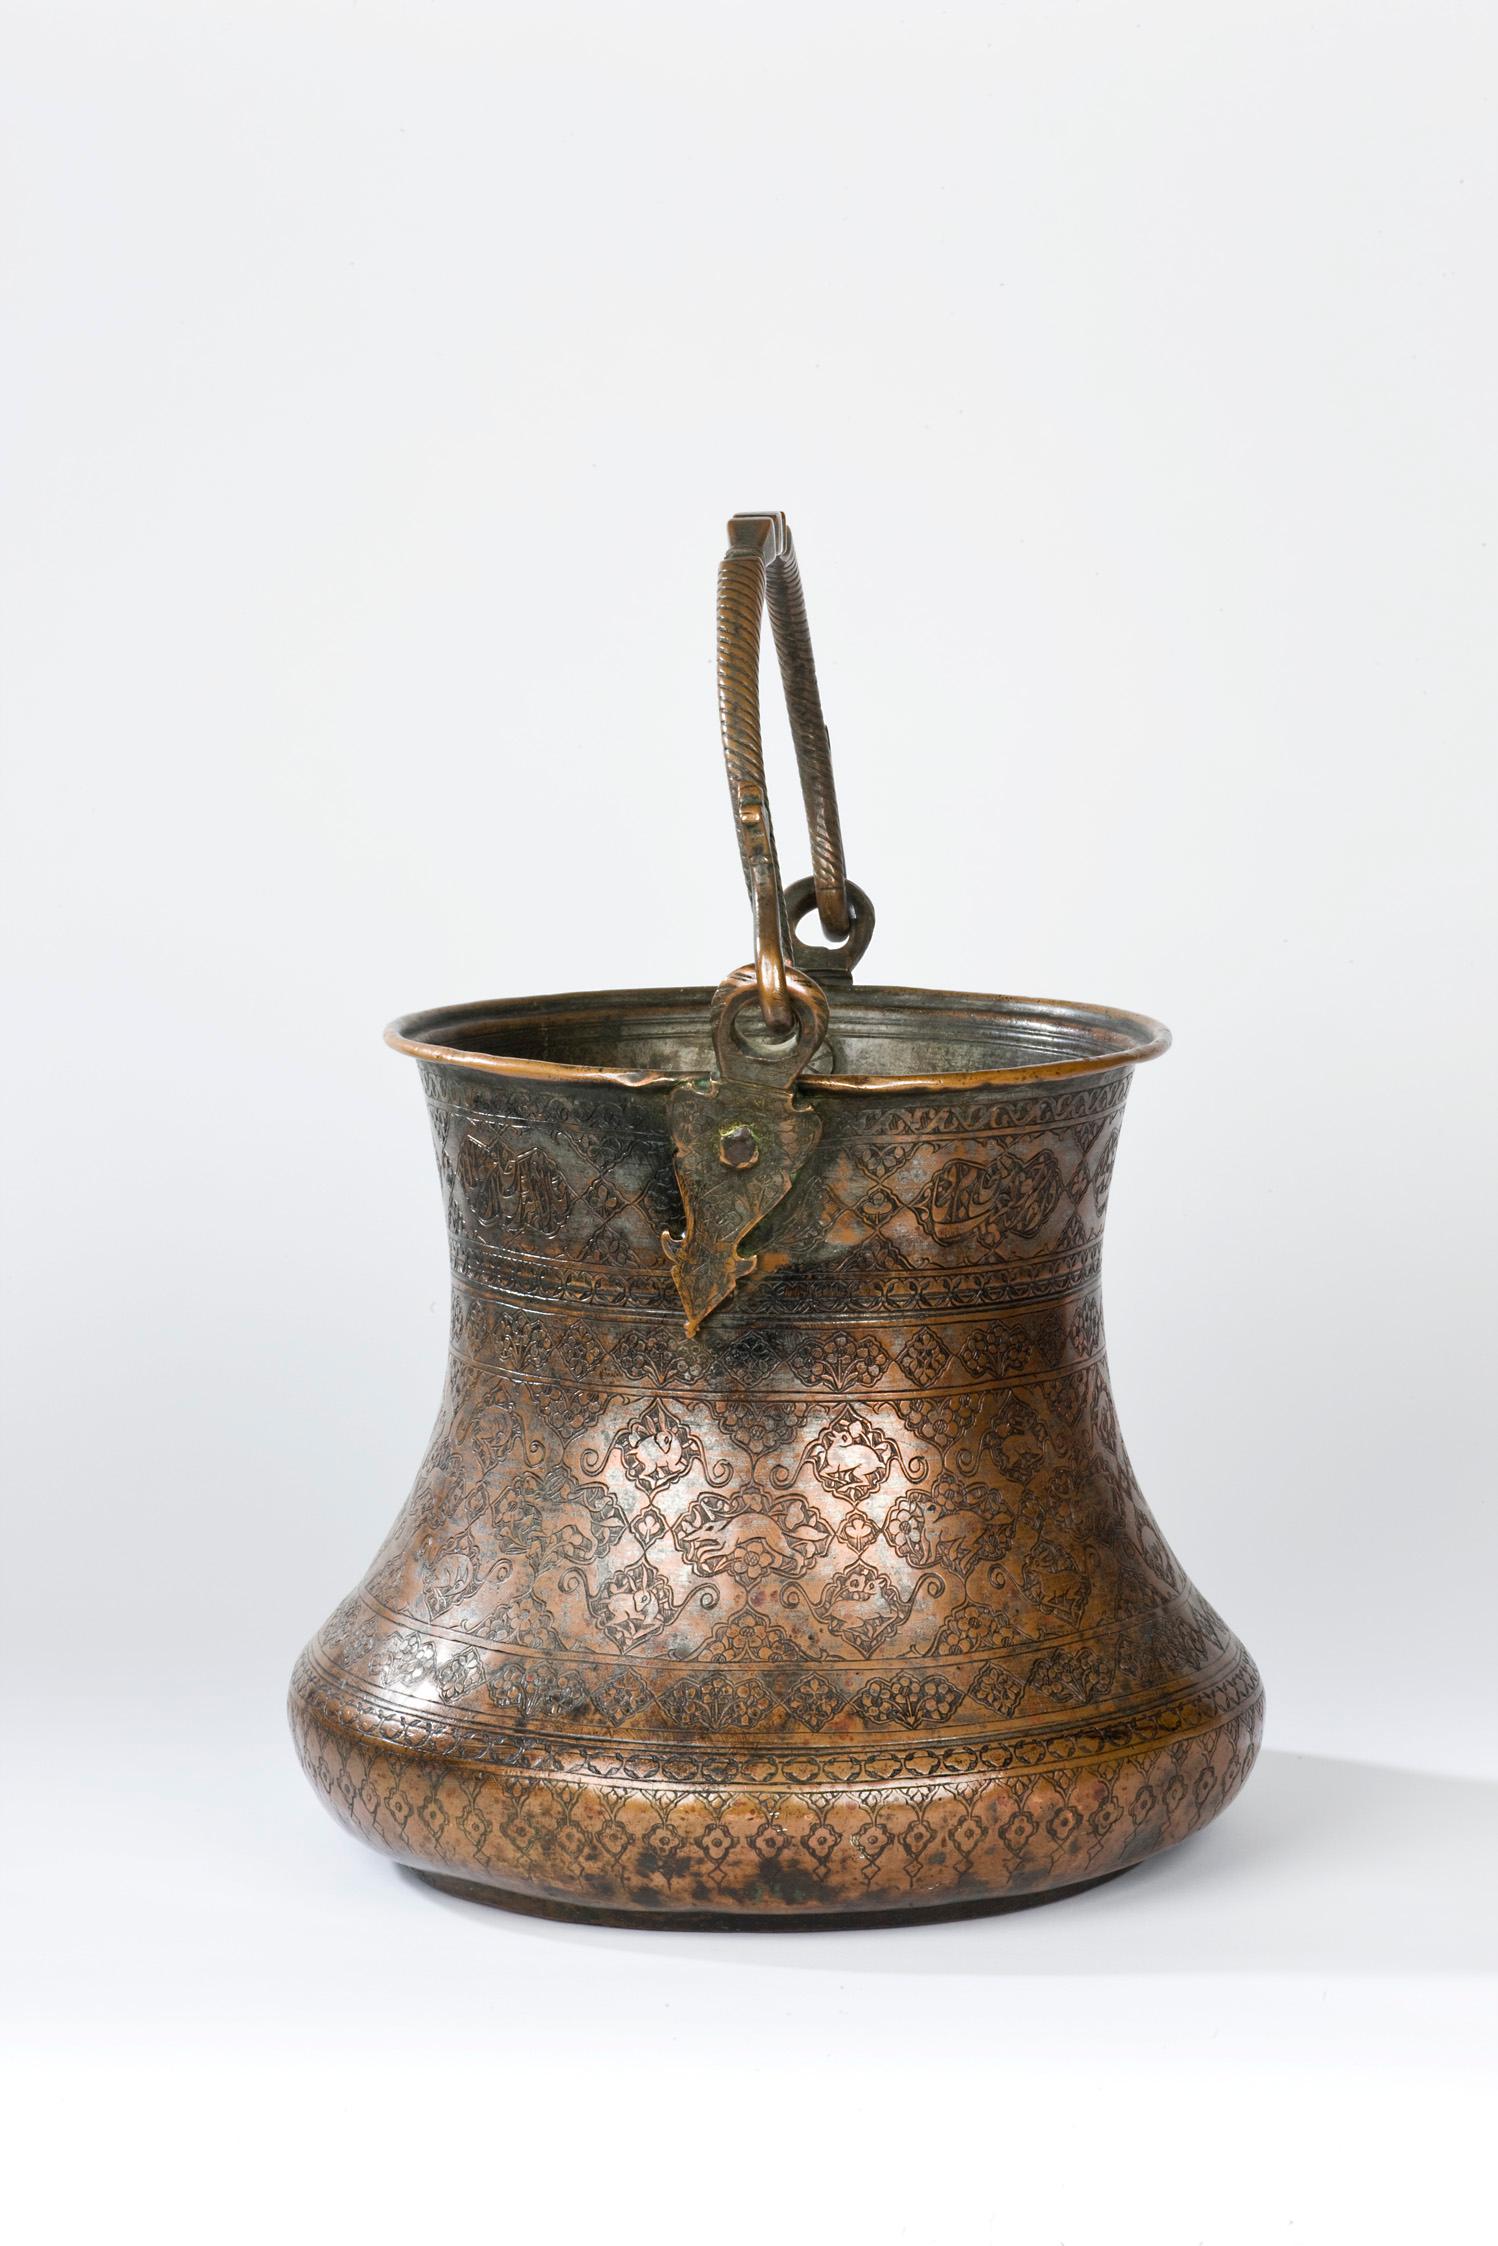 17th century Safavid bucket. Measures: H 28 cm x 30 cm.